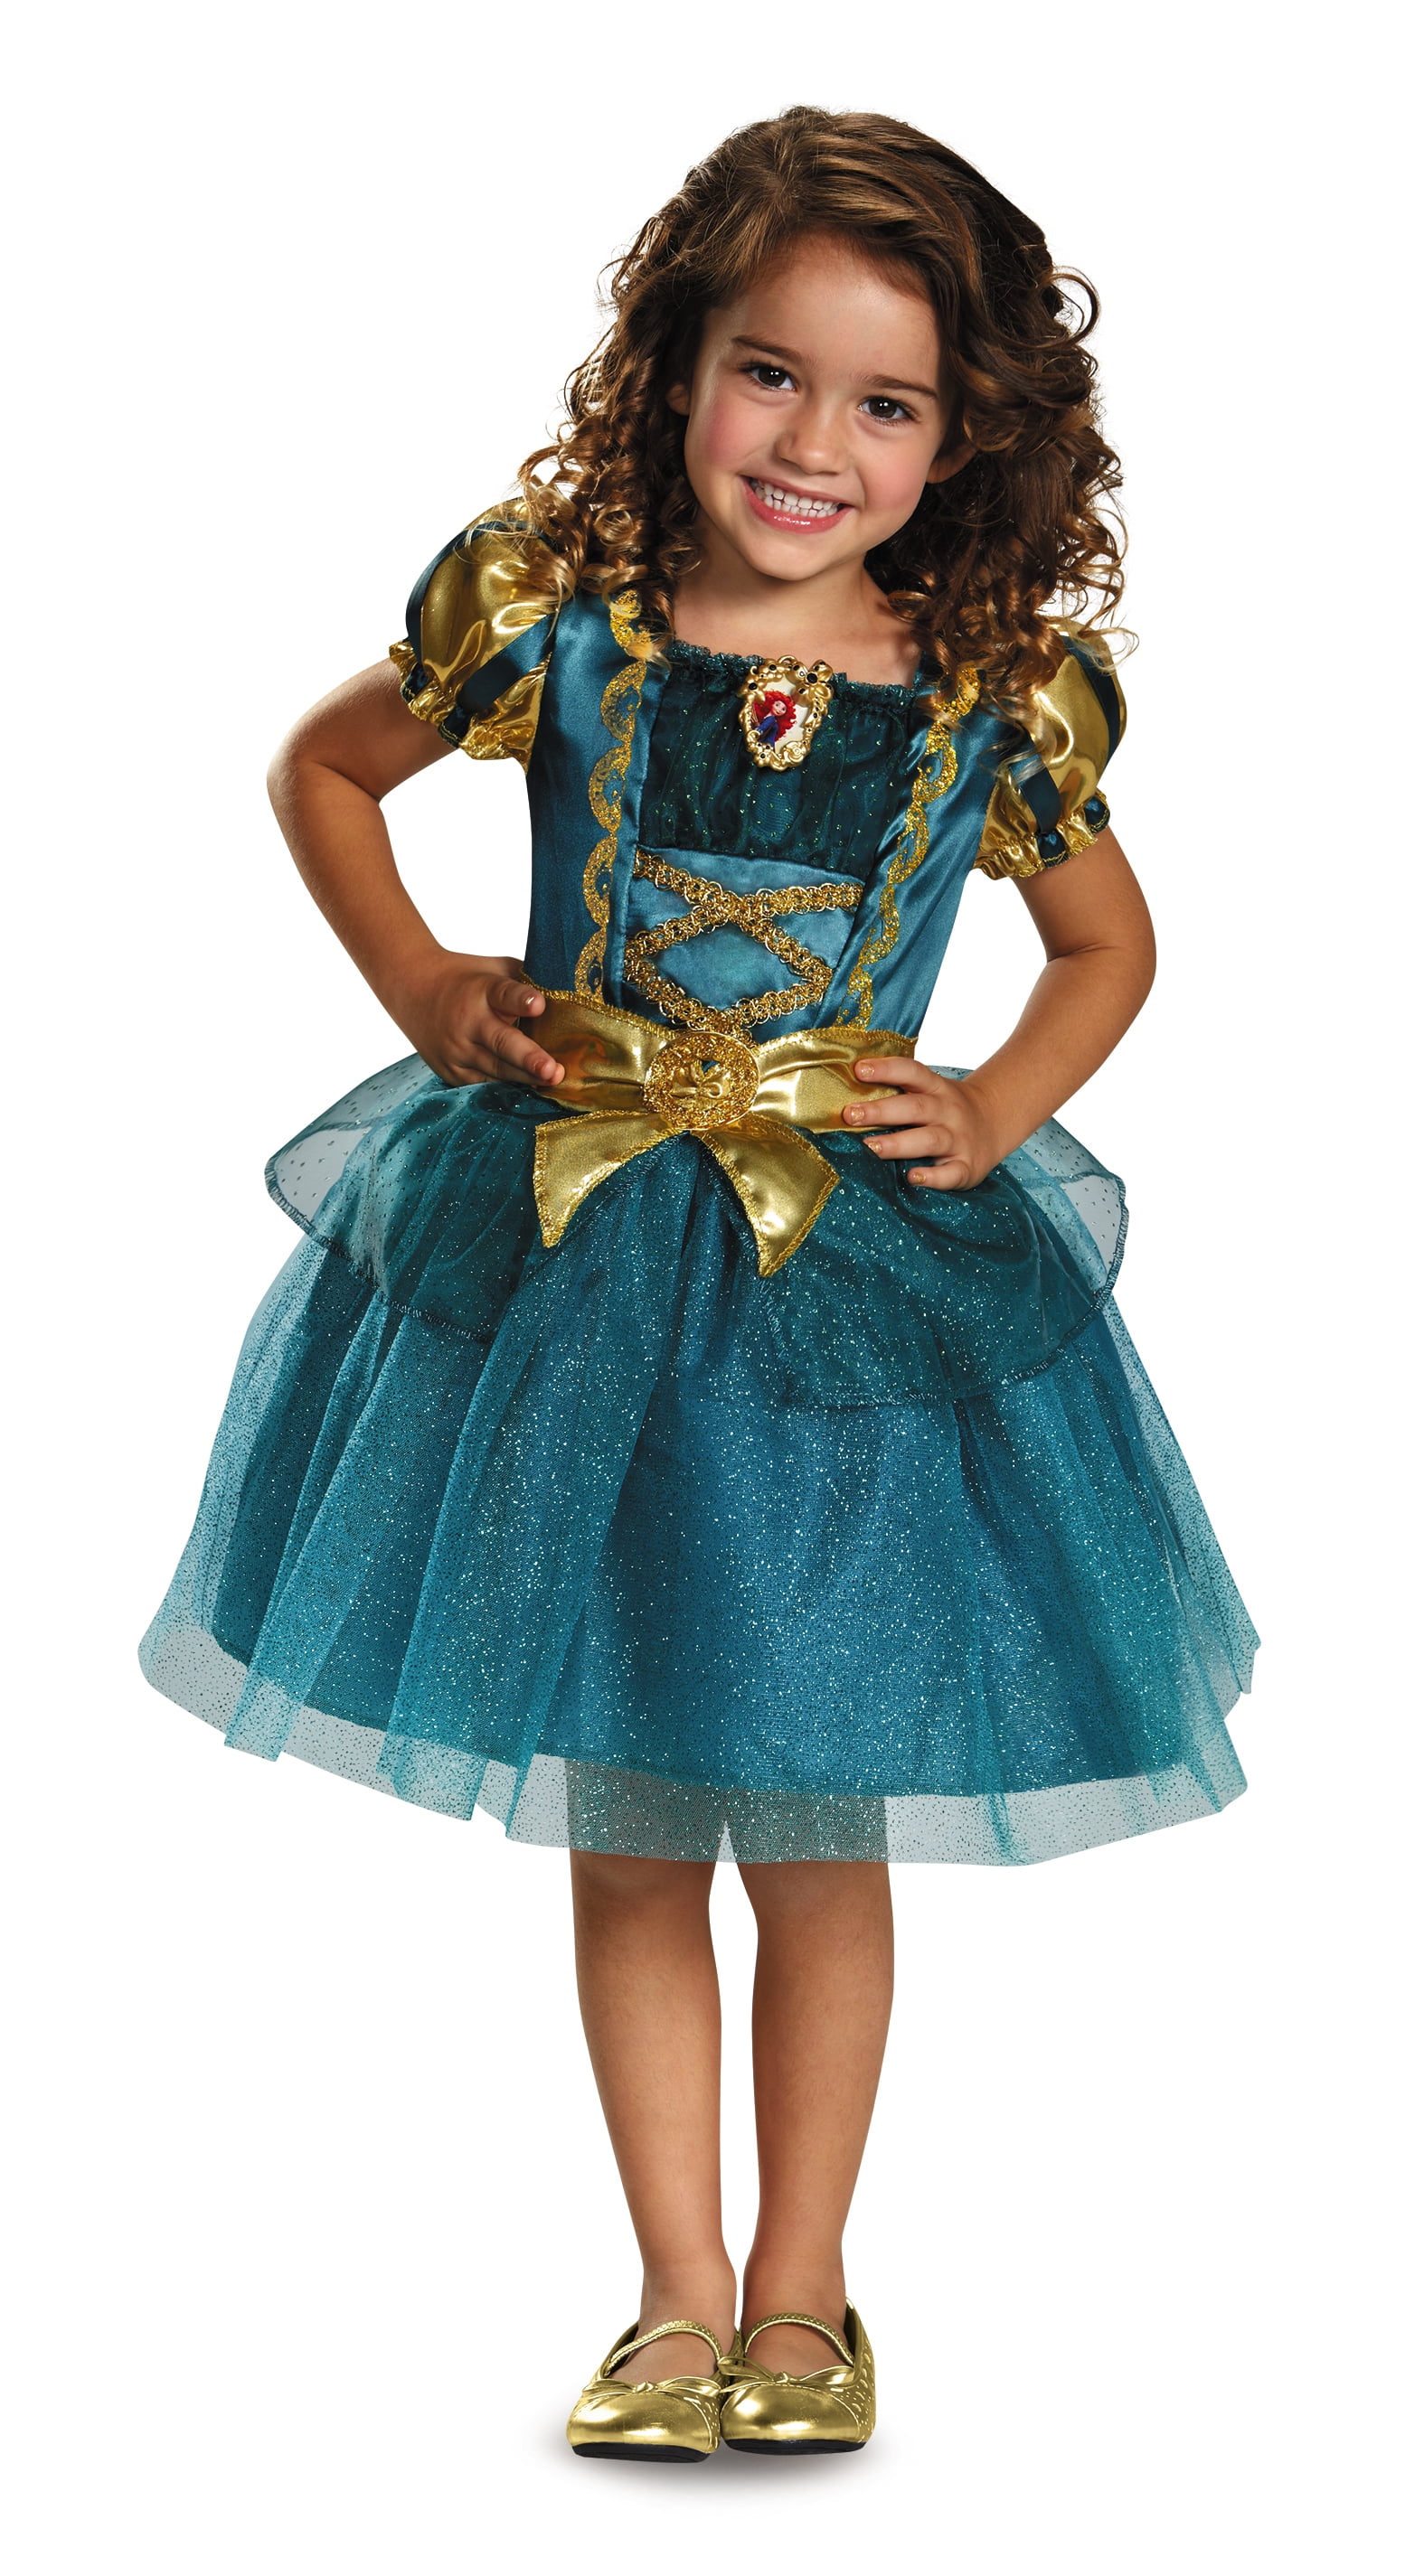 Disguise Disney Pixar Brave Merida Tutu Prestige Girls Costume X-Small//3T-4T 72618M